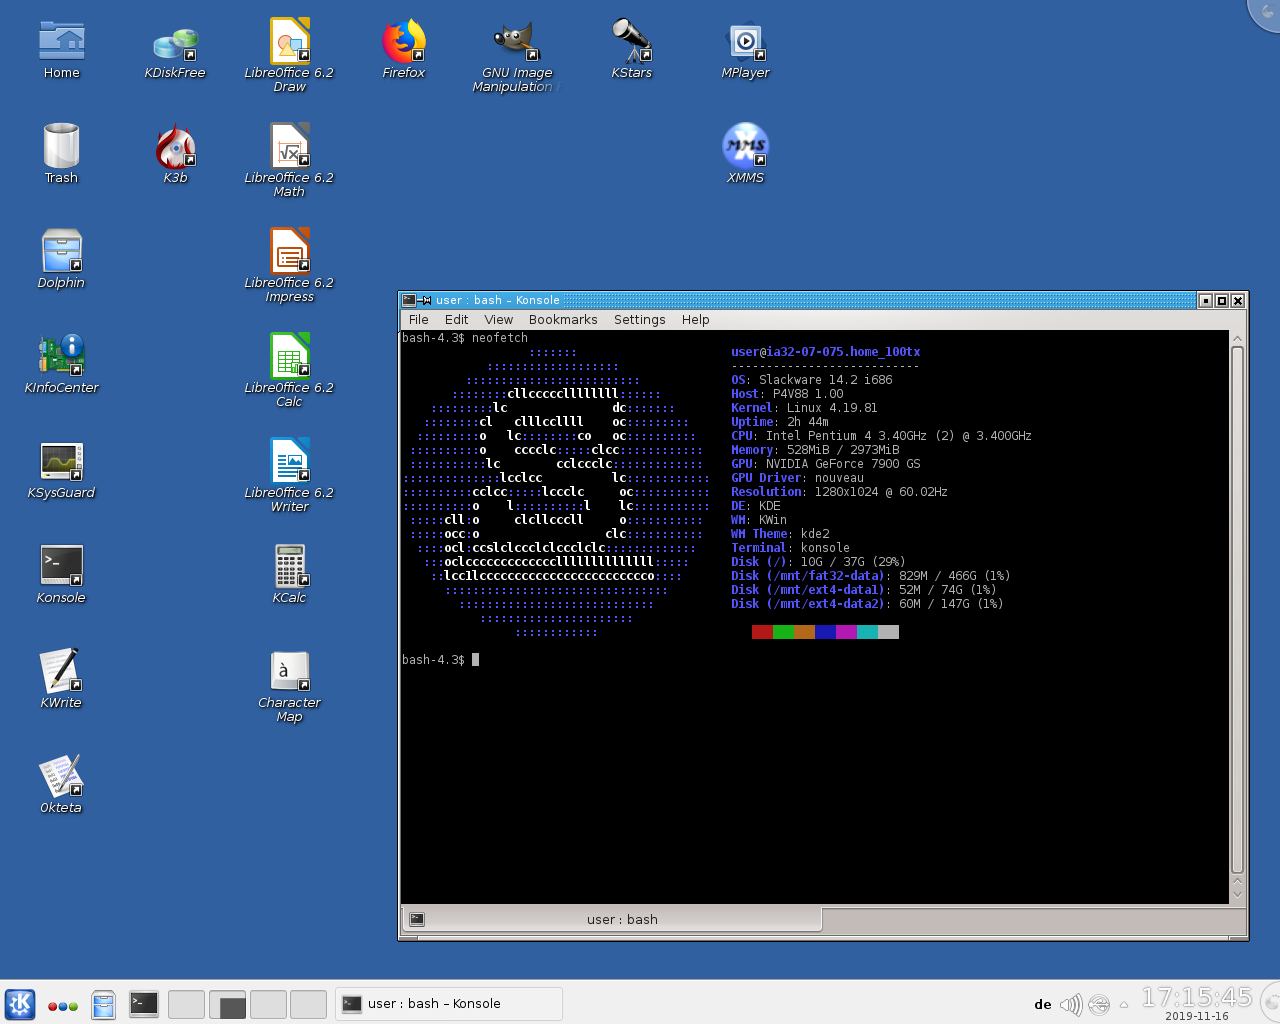 [Bild: screenshot_ia32-07-075_Linux.png]